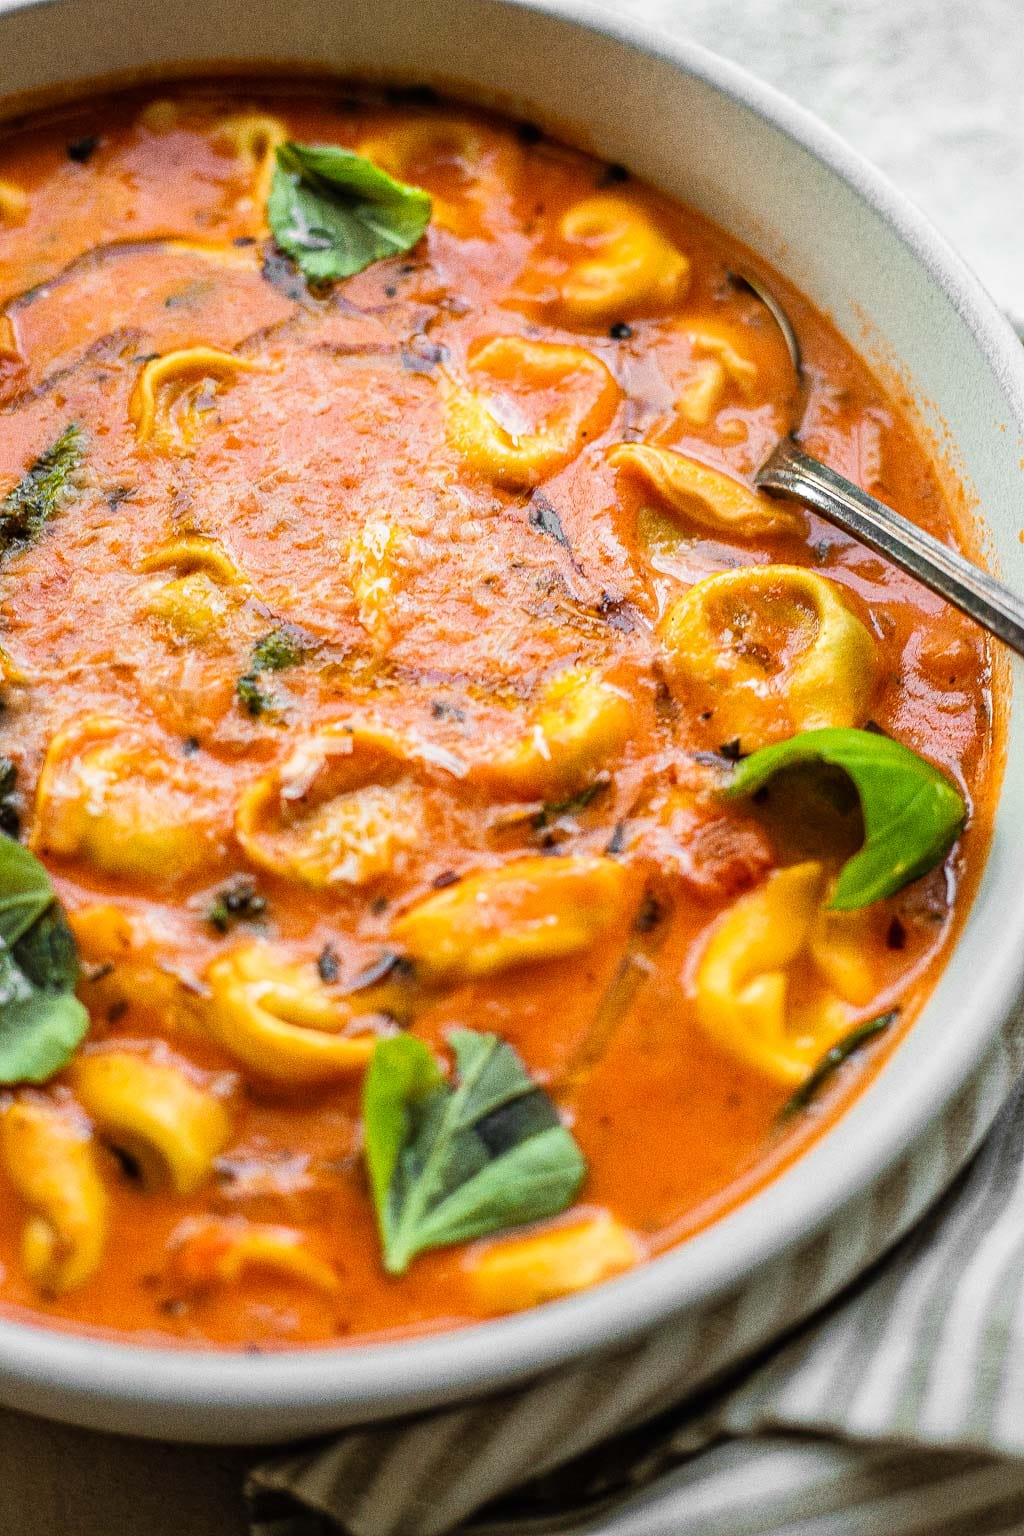 Tomato Tortellini Soup